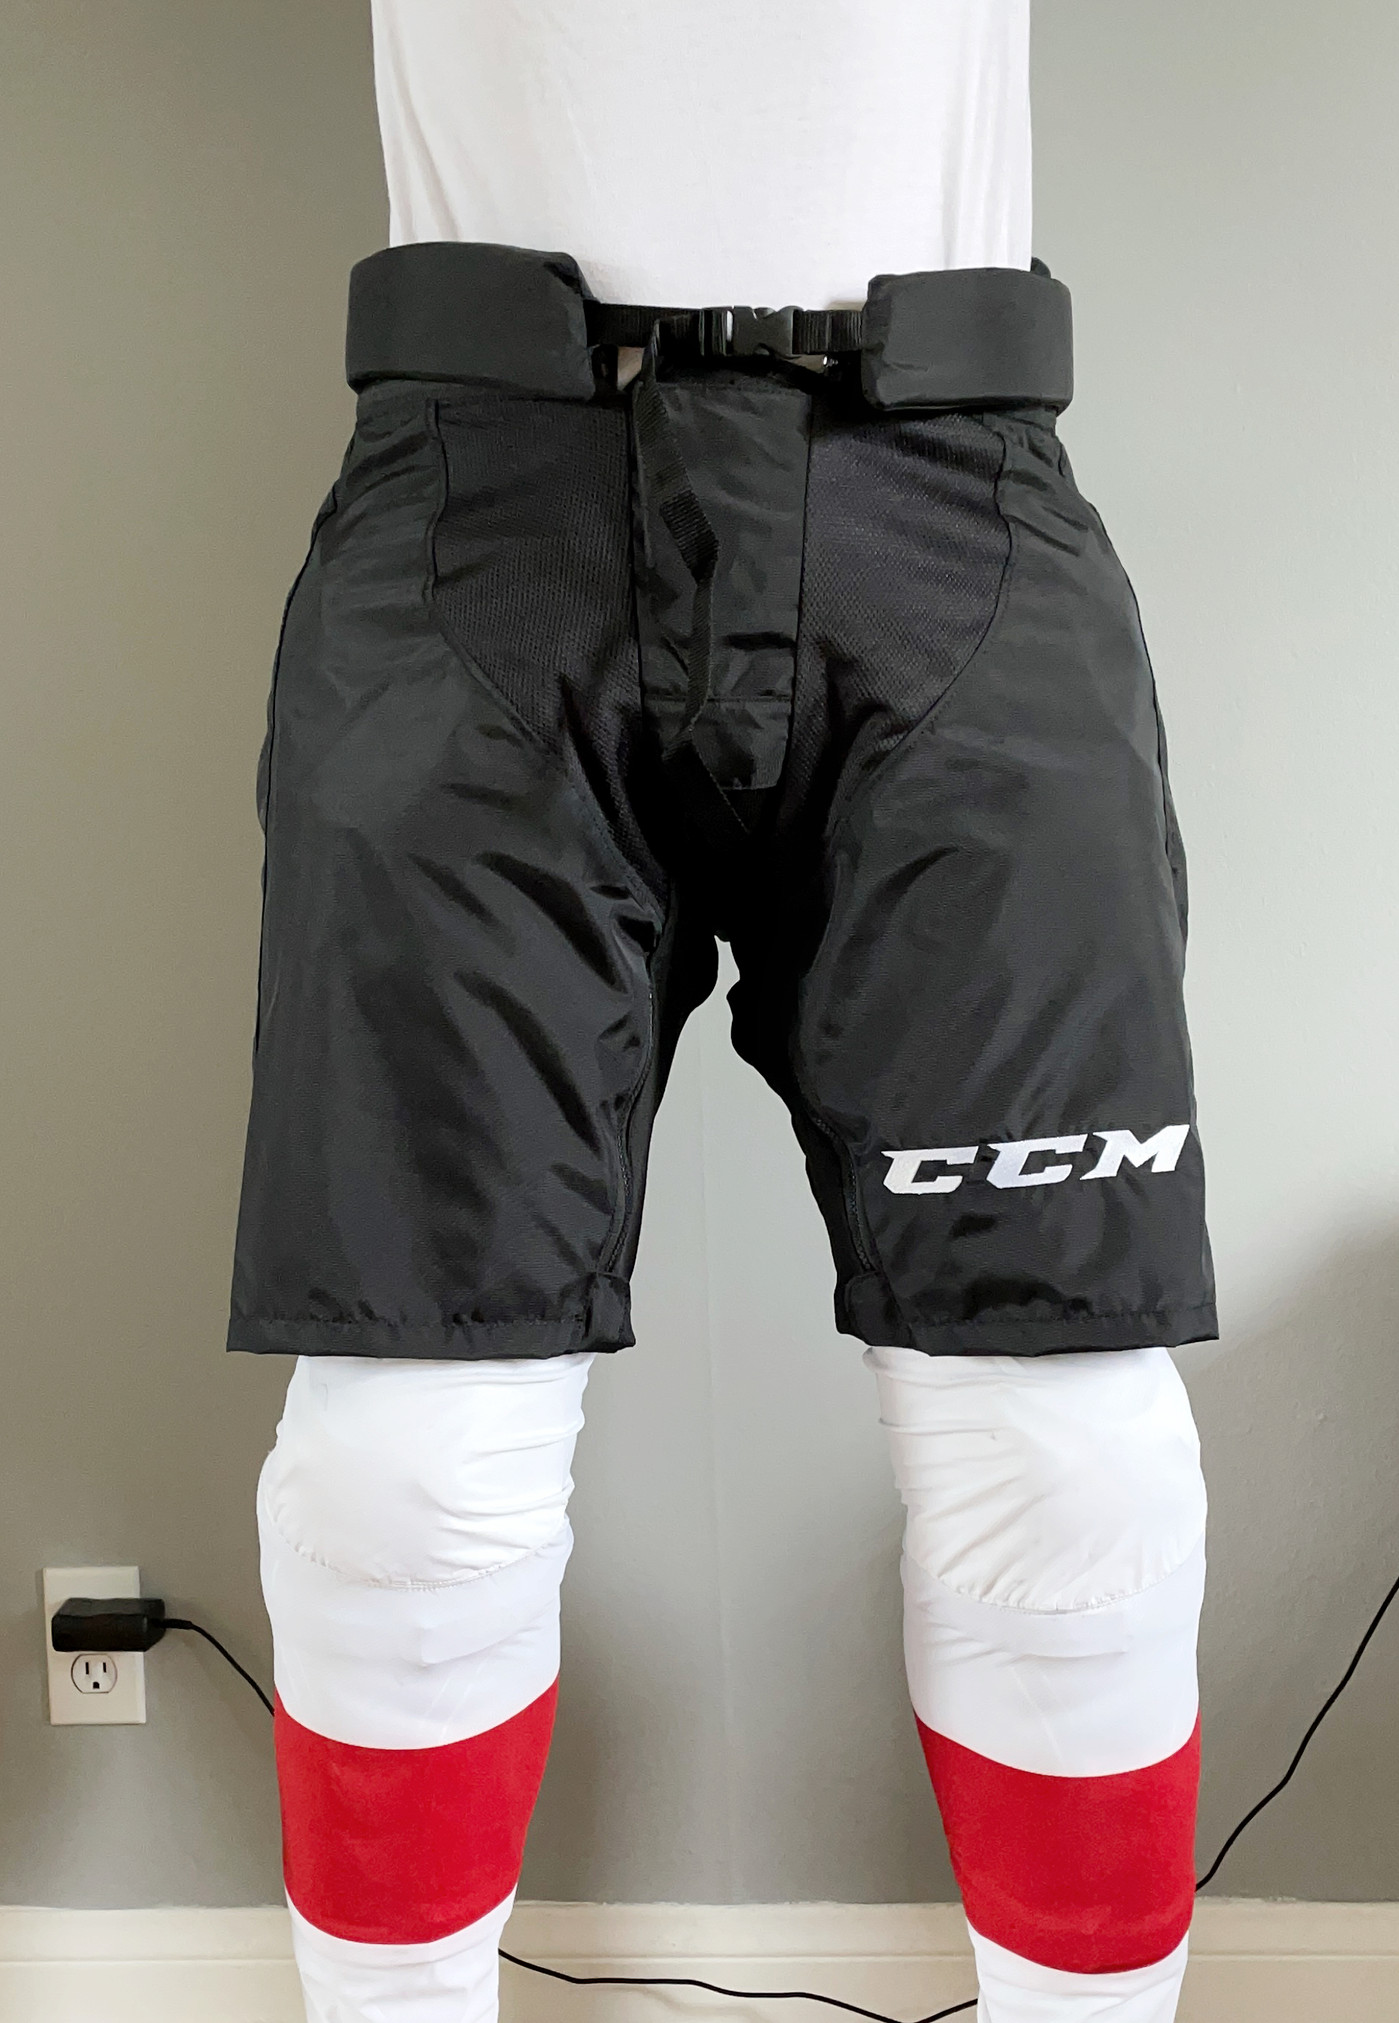 CCM PPTK vs PP90 girdle shell preference? - Ice Hockey Equipment